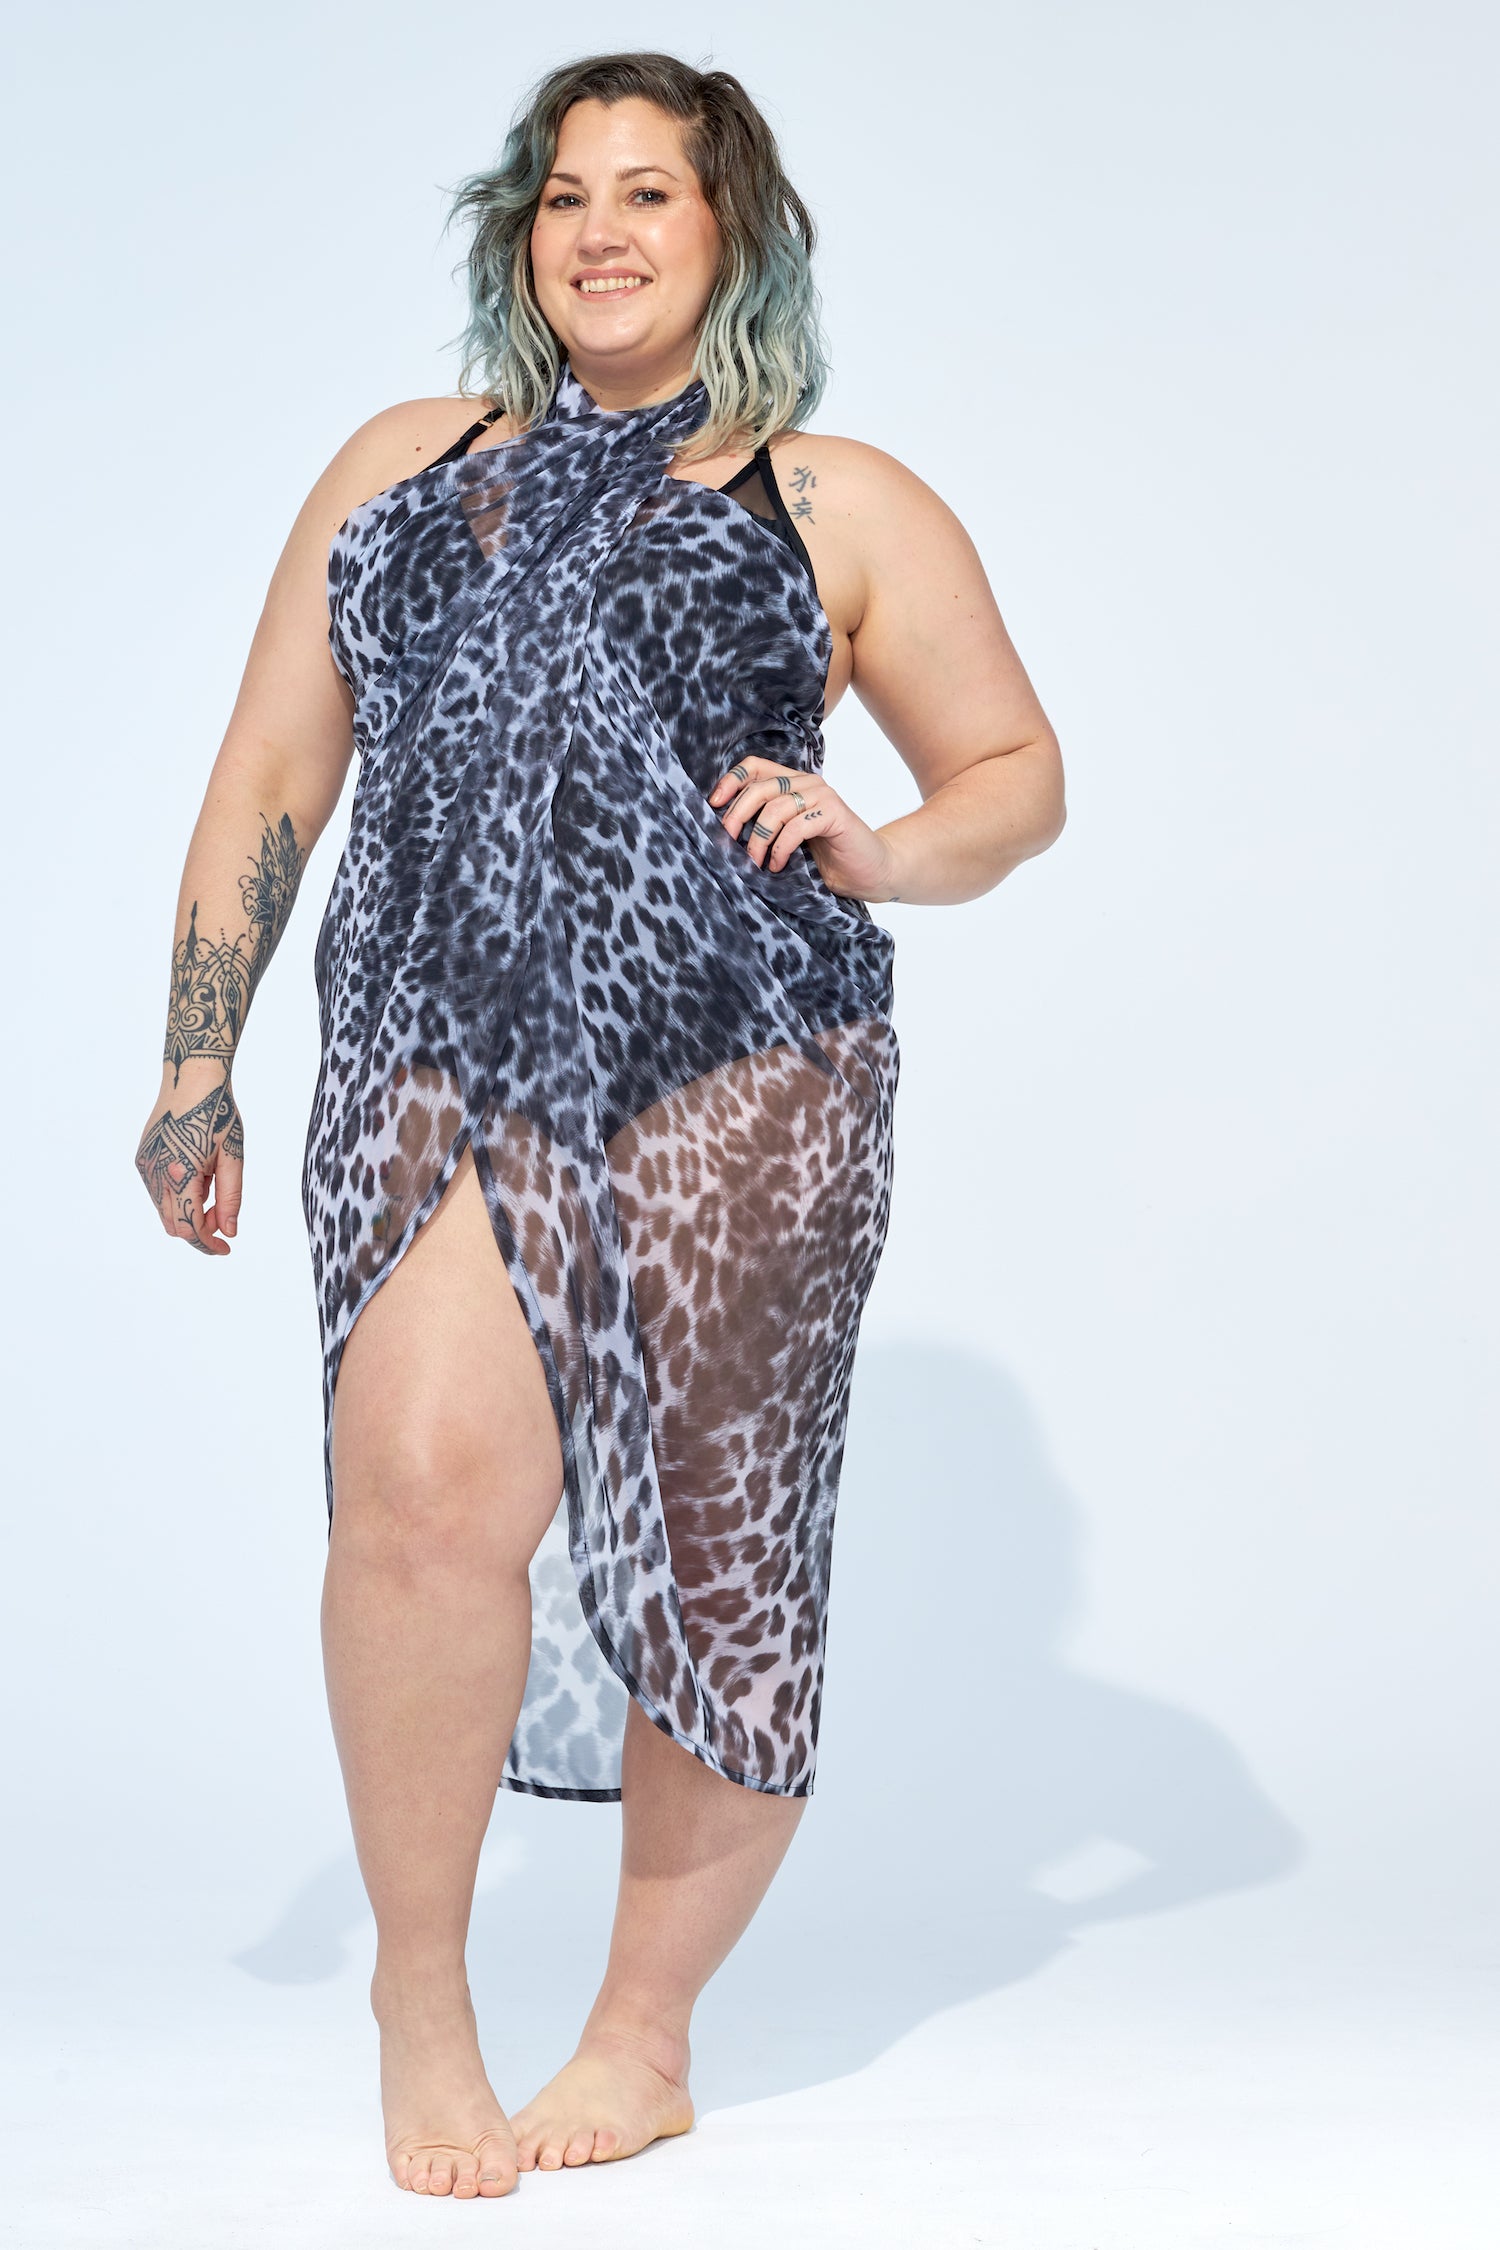 Pareo – Leopard print - Selfish swimwear Cover ups